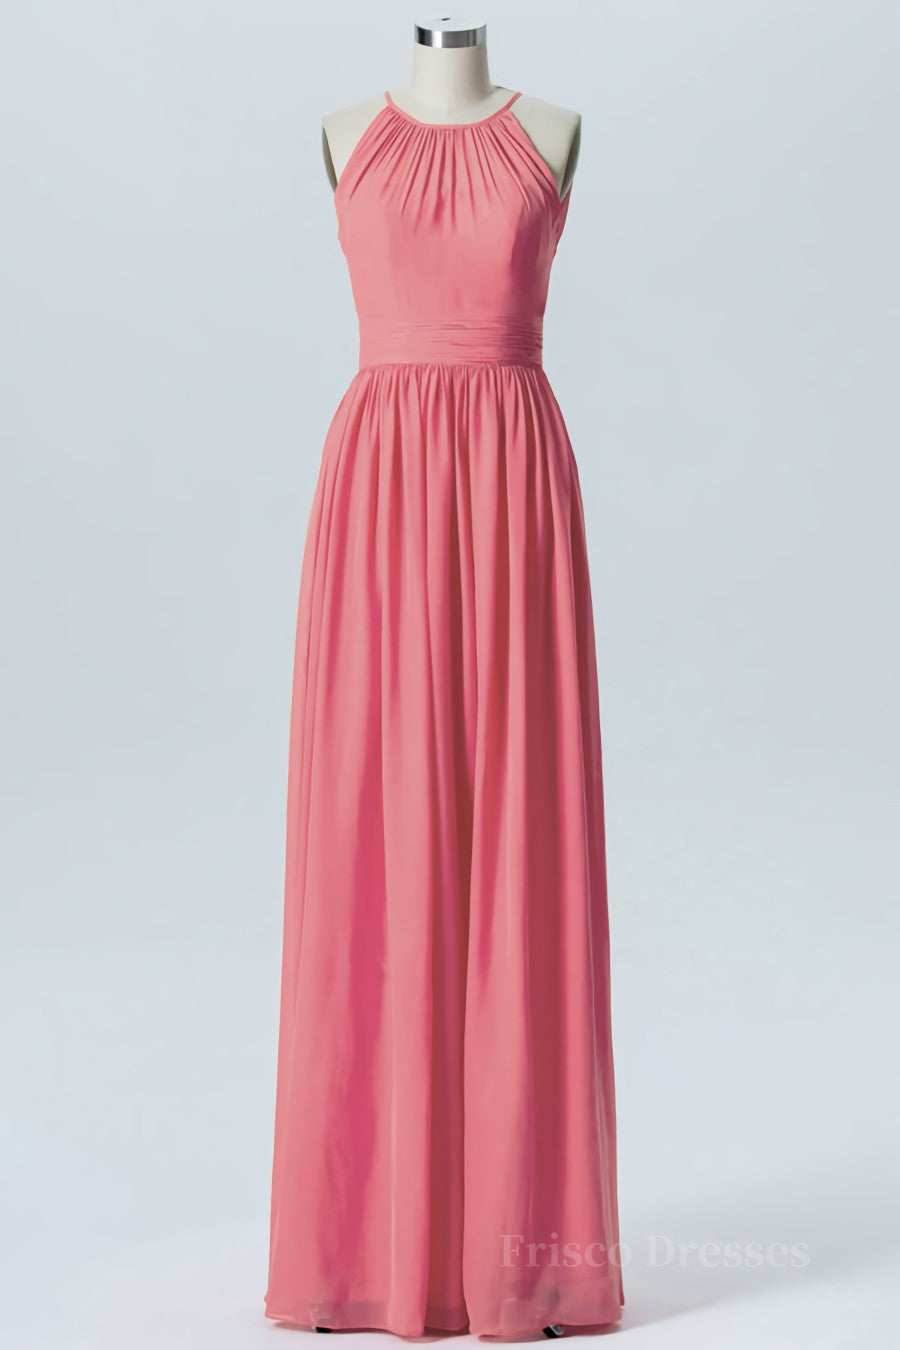 Coral Chiffon Jewel A-line Long Bridesmaid Dress